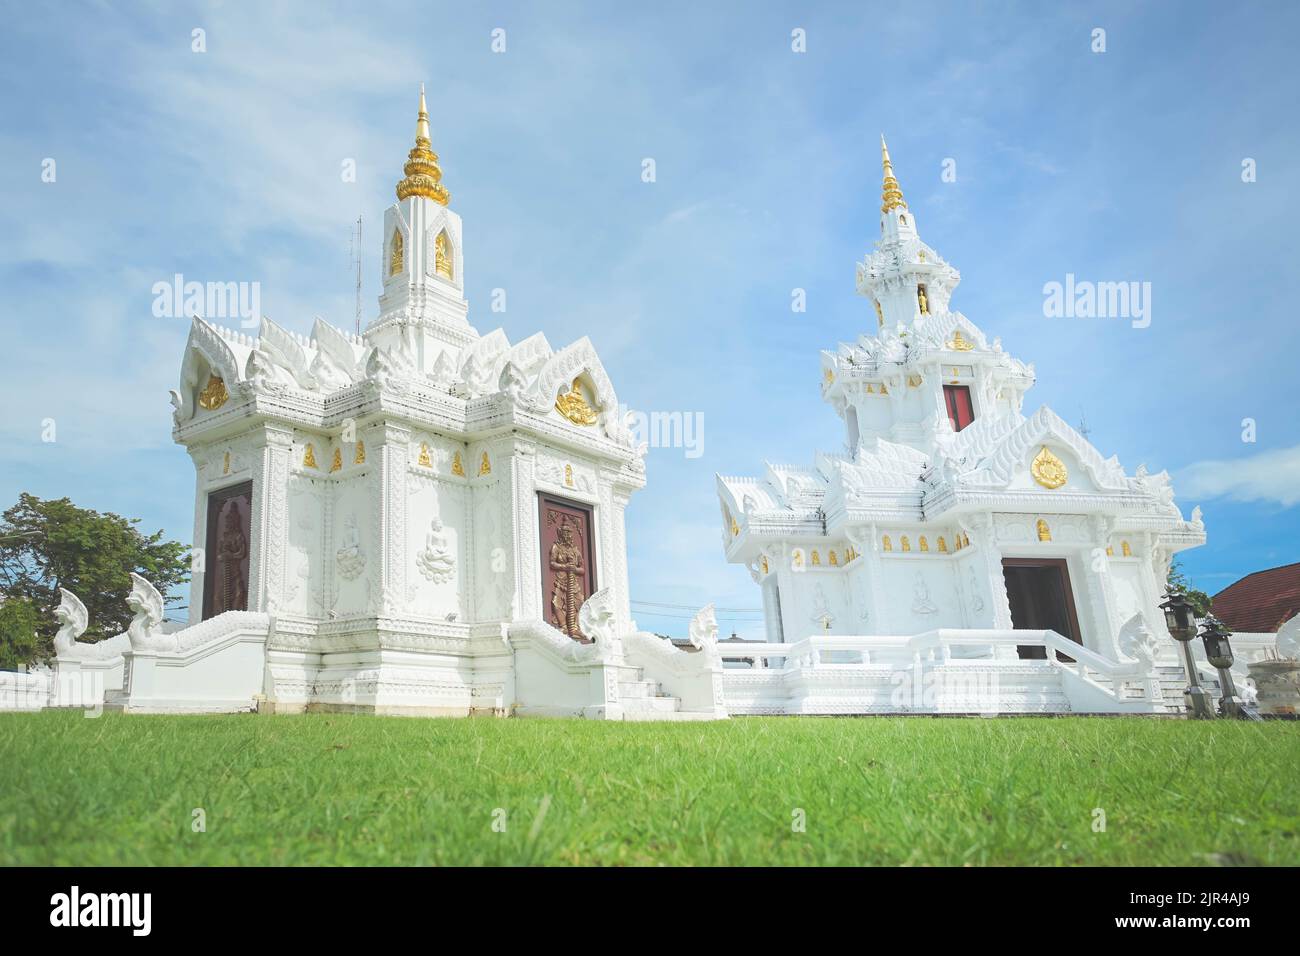 The beautiful scenery of  the famous Nakhon Si Thammarat City Pillar Shrine, Nakon Si Thammarat province, Thailand. Stock Photo